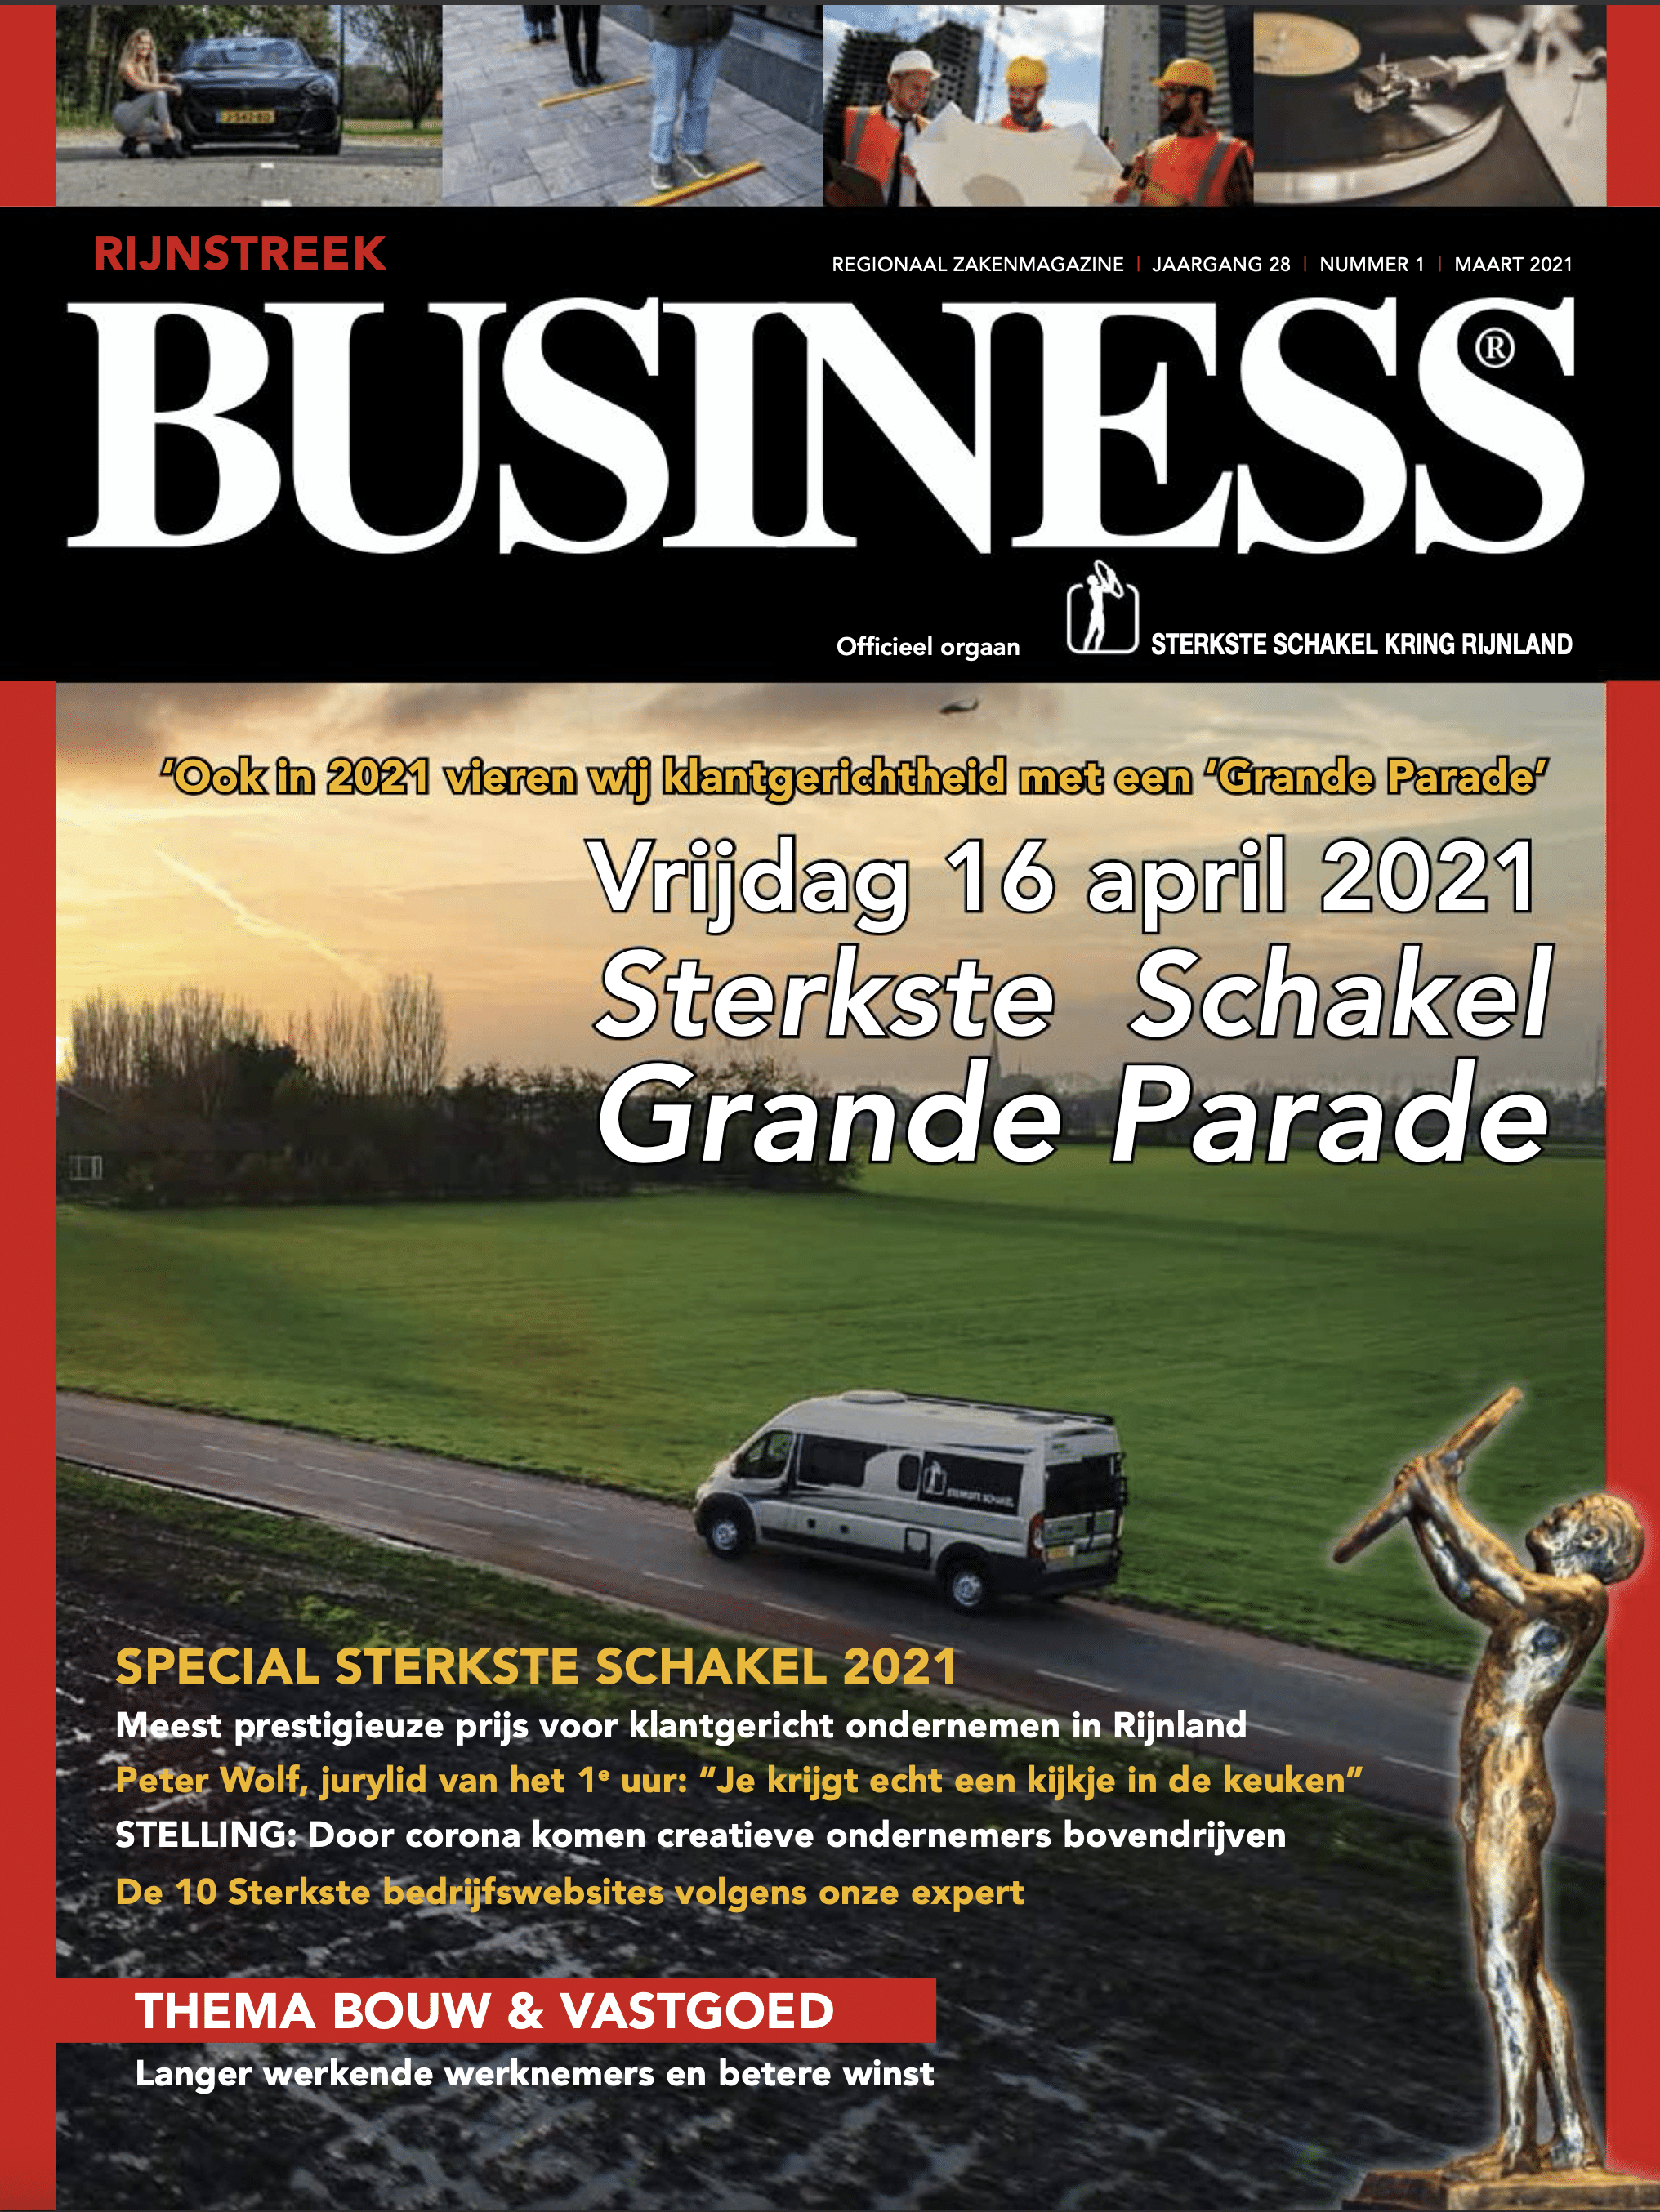 Rijnstreek Business, editie 1 - februari 2021